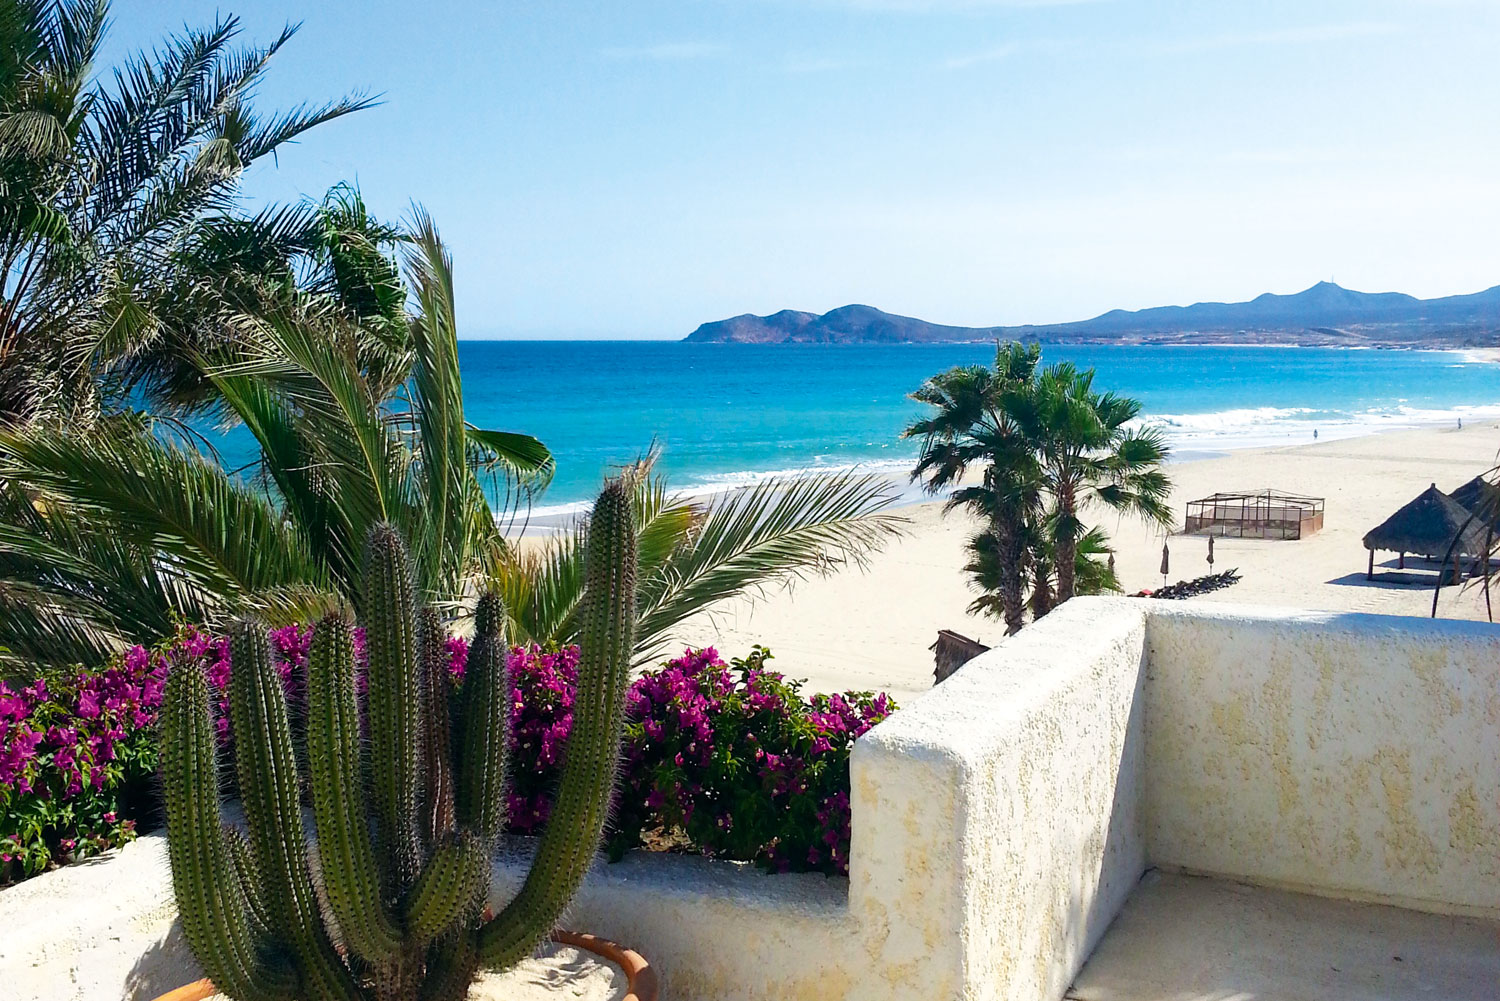 Overlooking the beach at Las Ventanas al Paraiso resort in Baja California ...